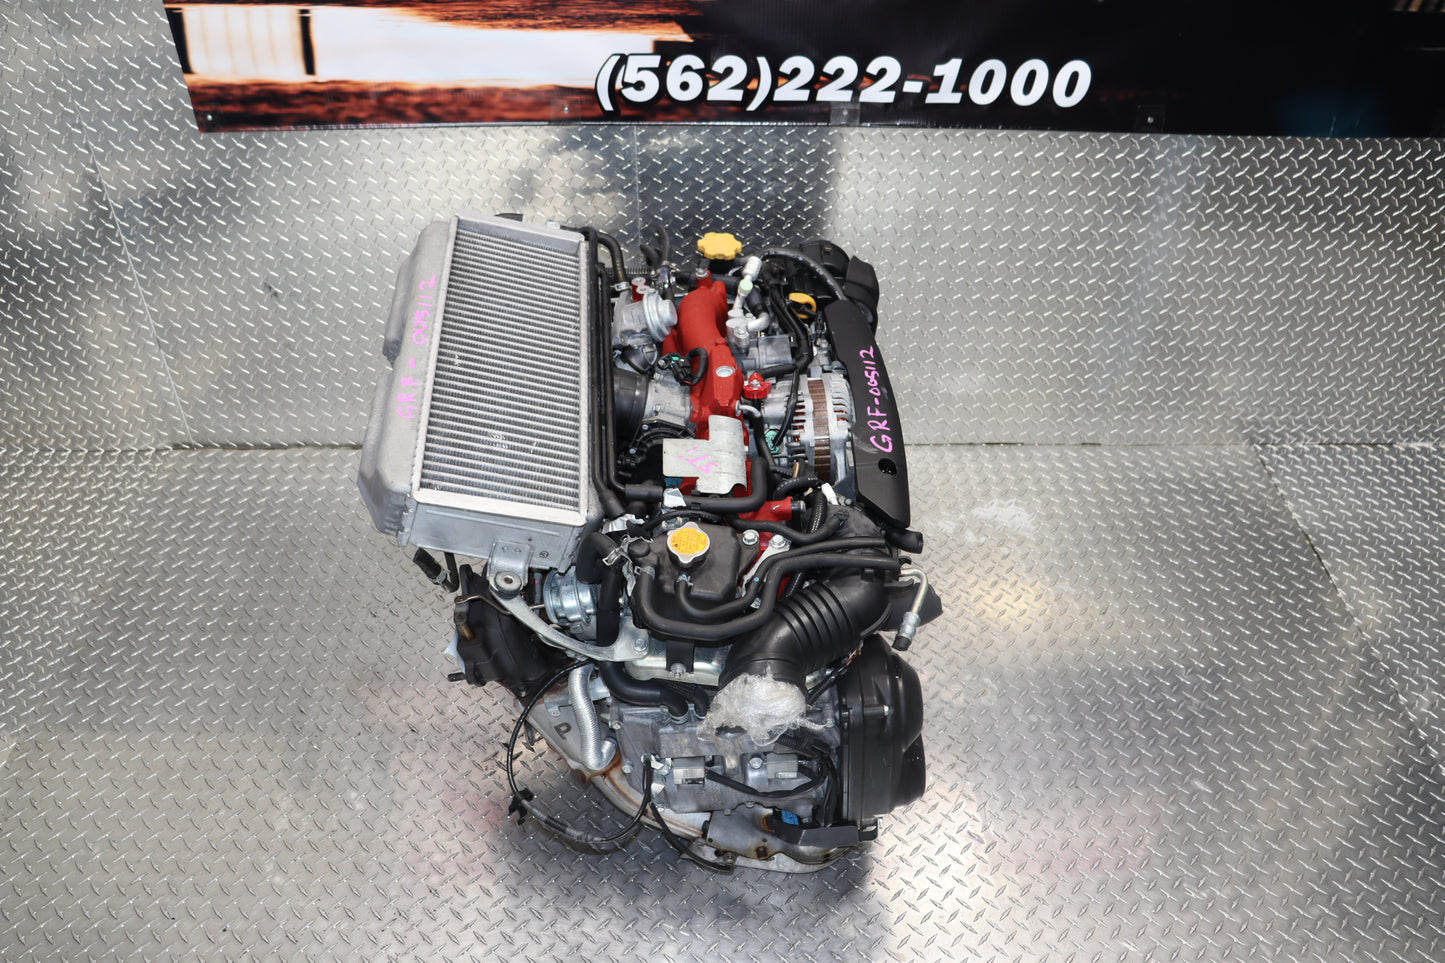 JDM EJ257 MOTOR 2015 - 2019 SUBARU WRX STI V10 AVCS TURBO BOXER ENGINE IMPORTED